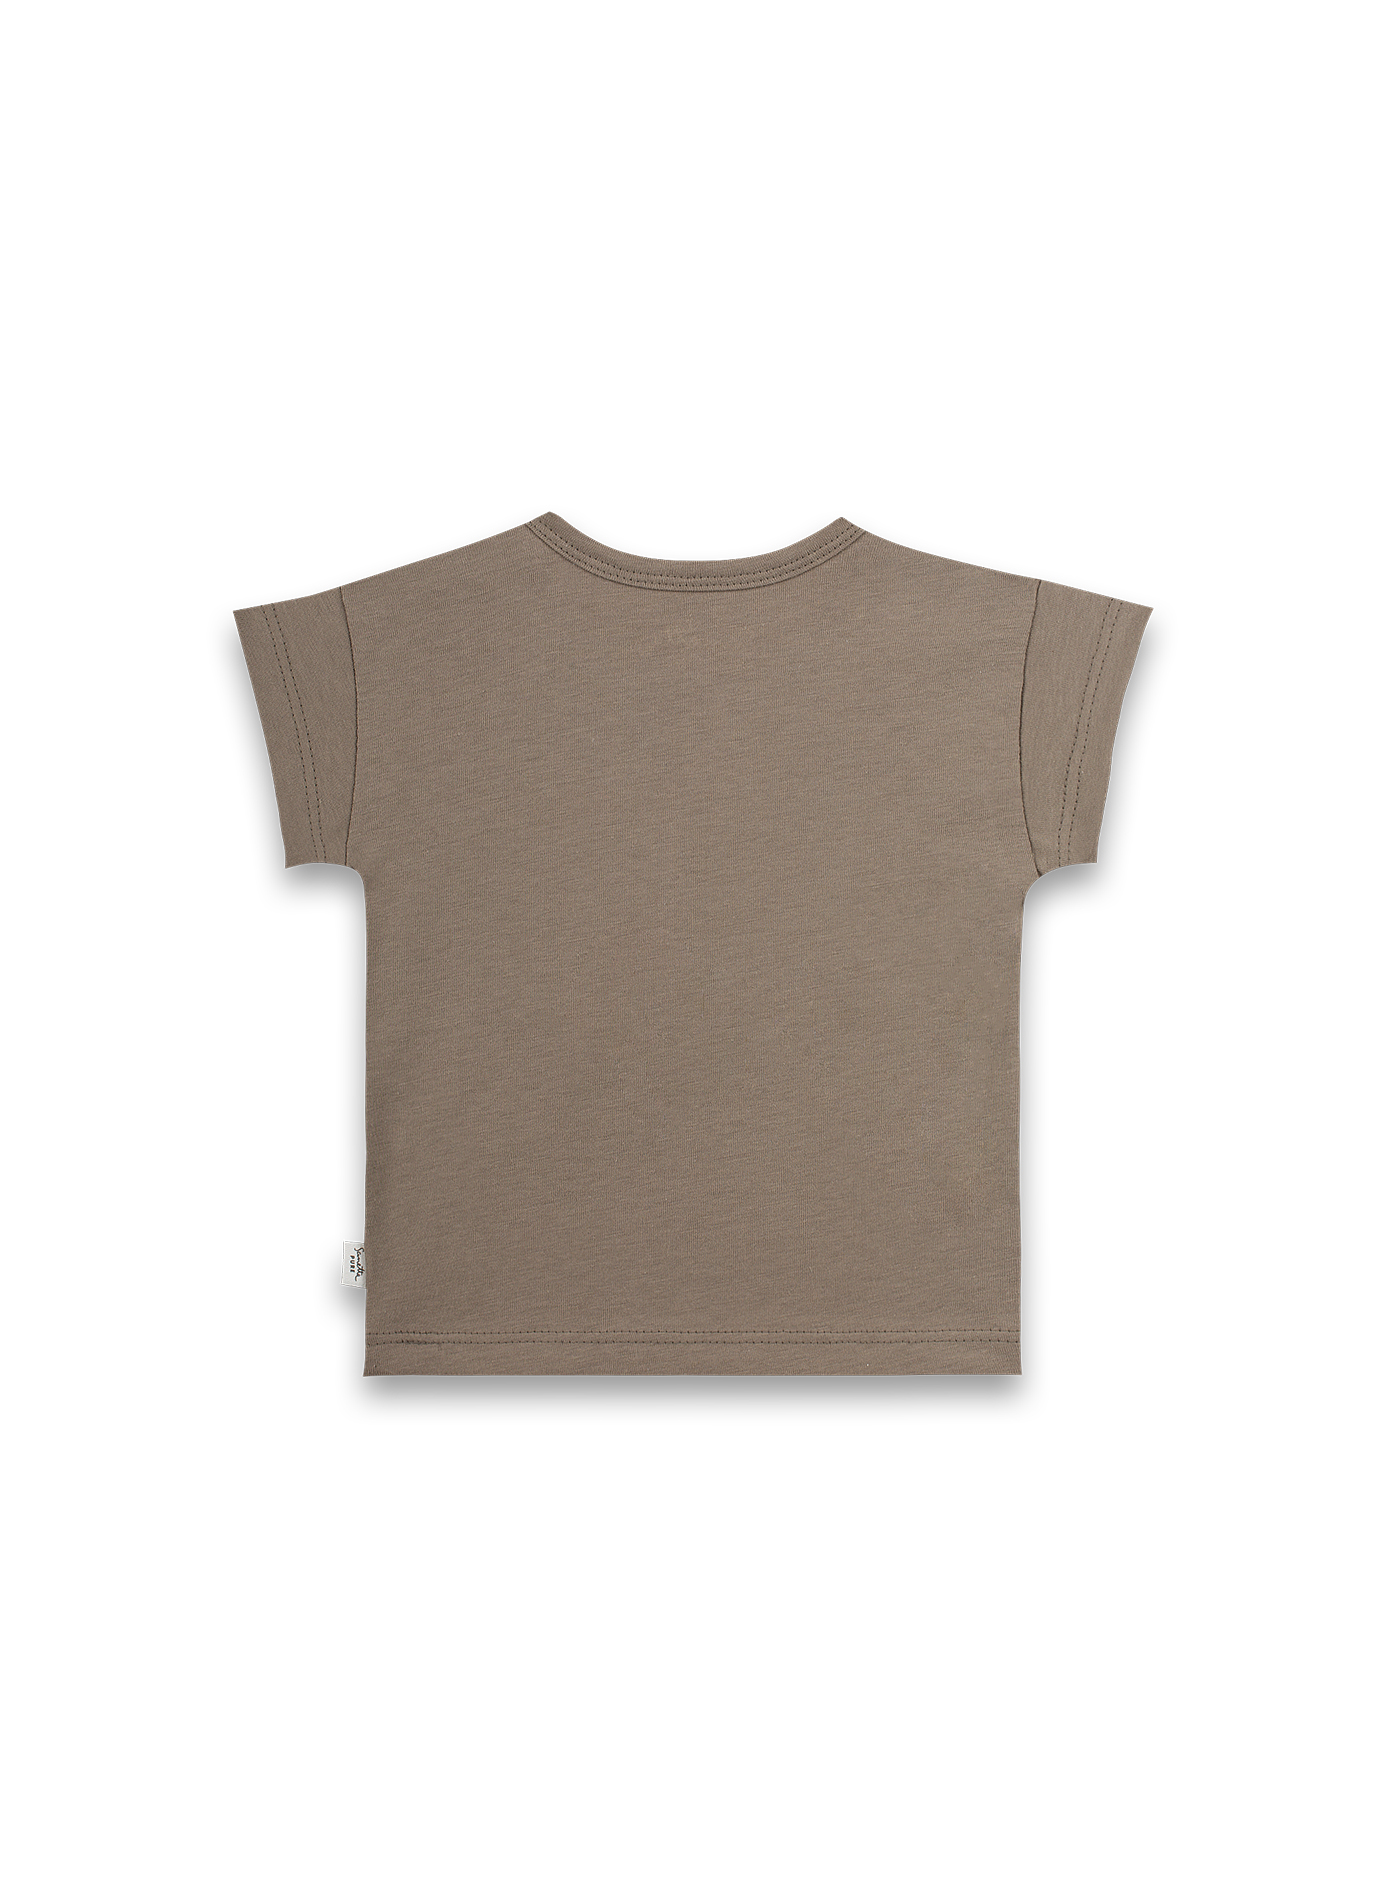 Unisex T-Shirt Braun